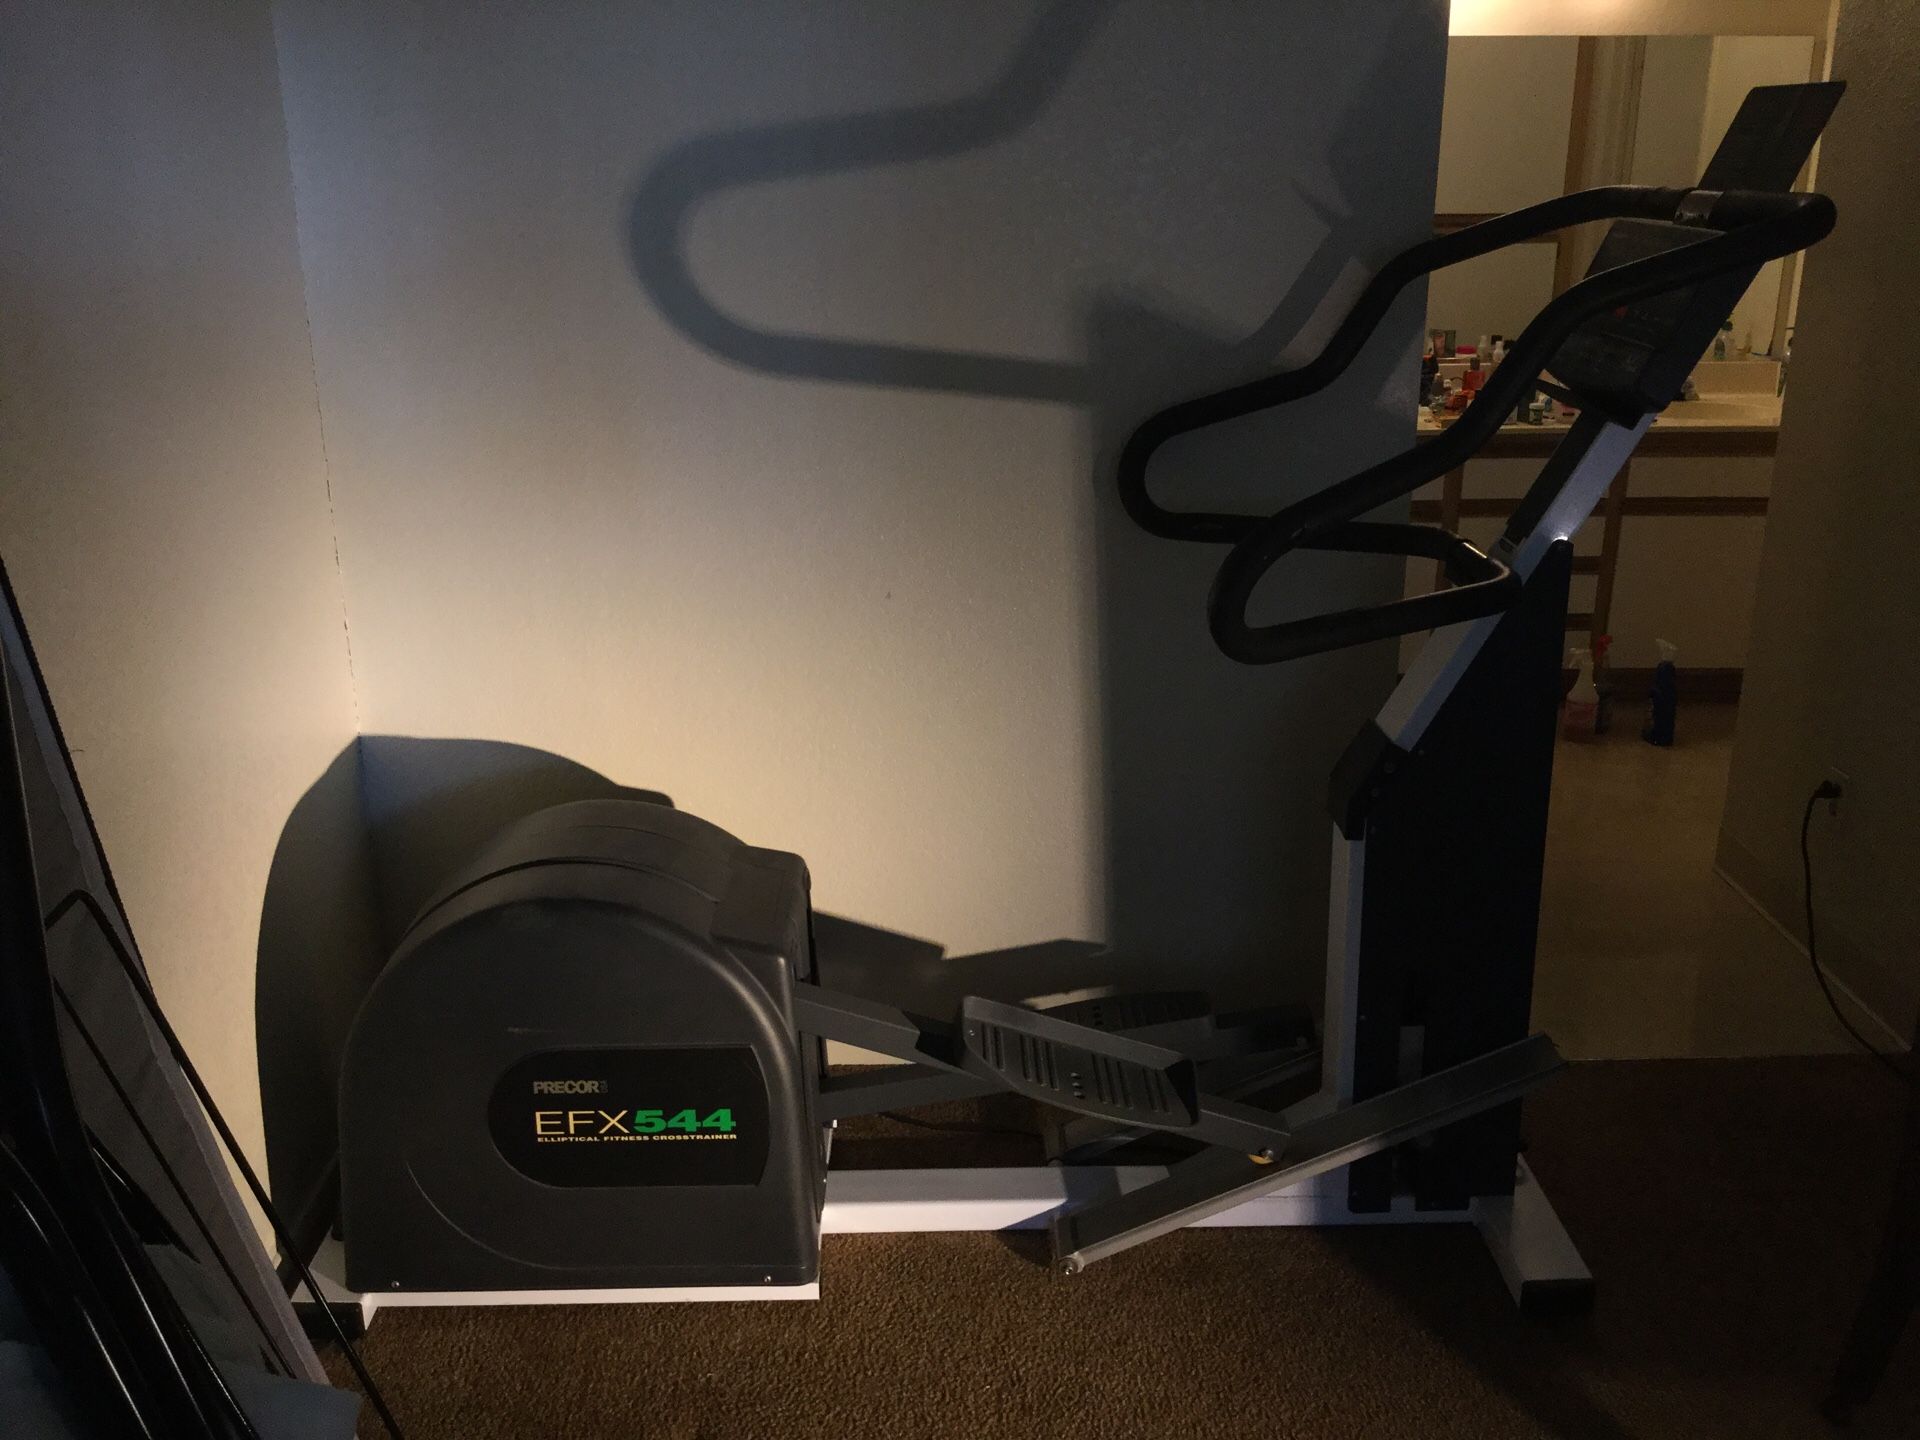 Elliptical machine Precor USA EFX544 Fitness Crosstrainer